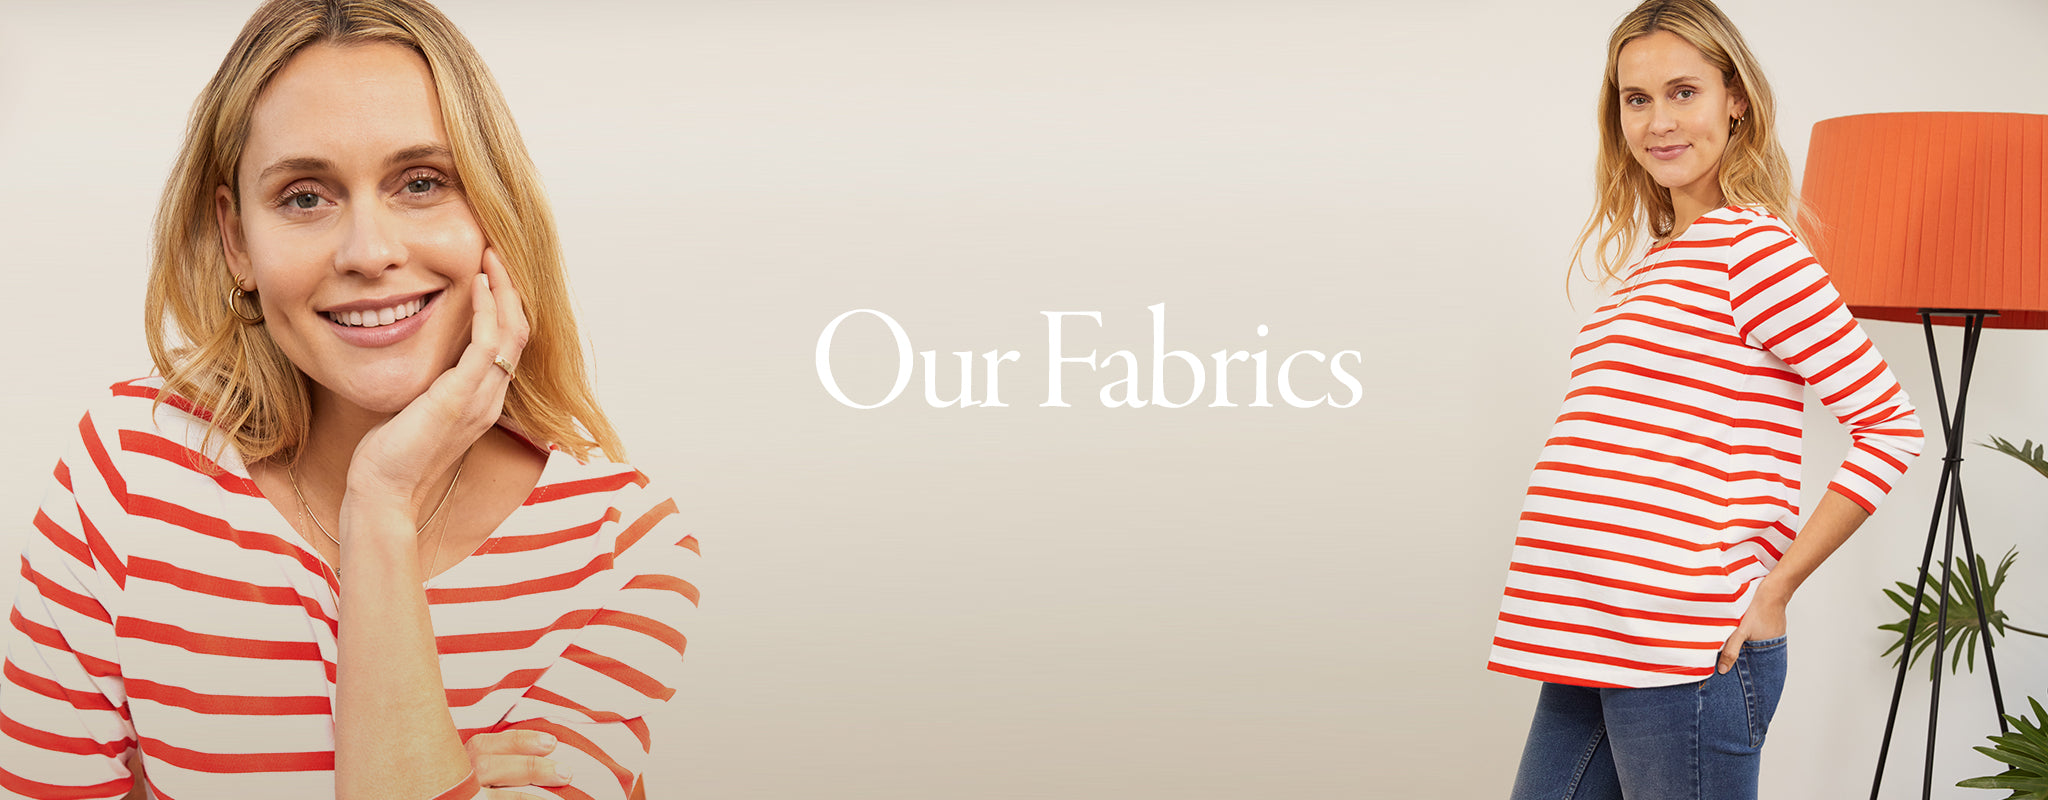 Our Fabrics